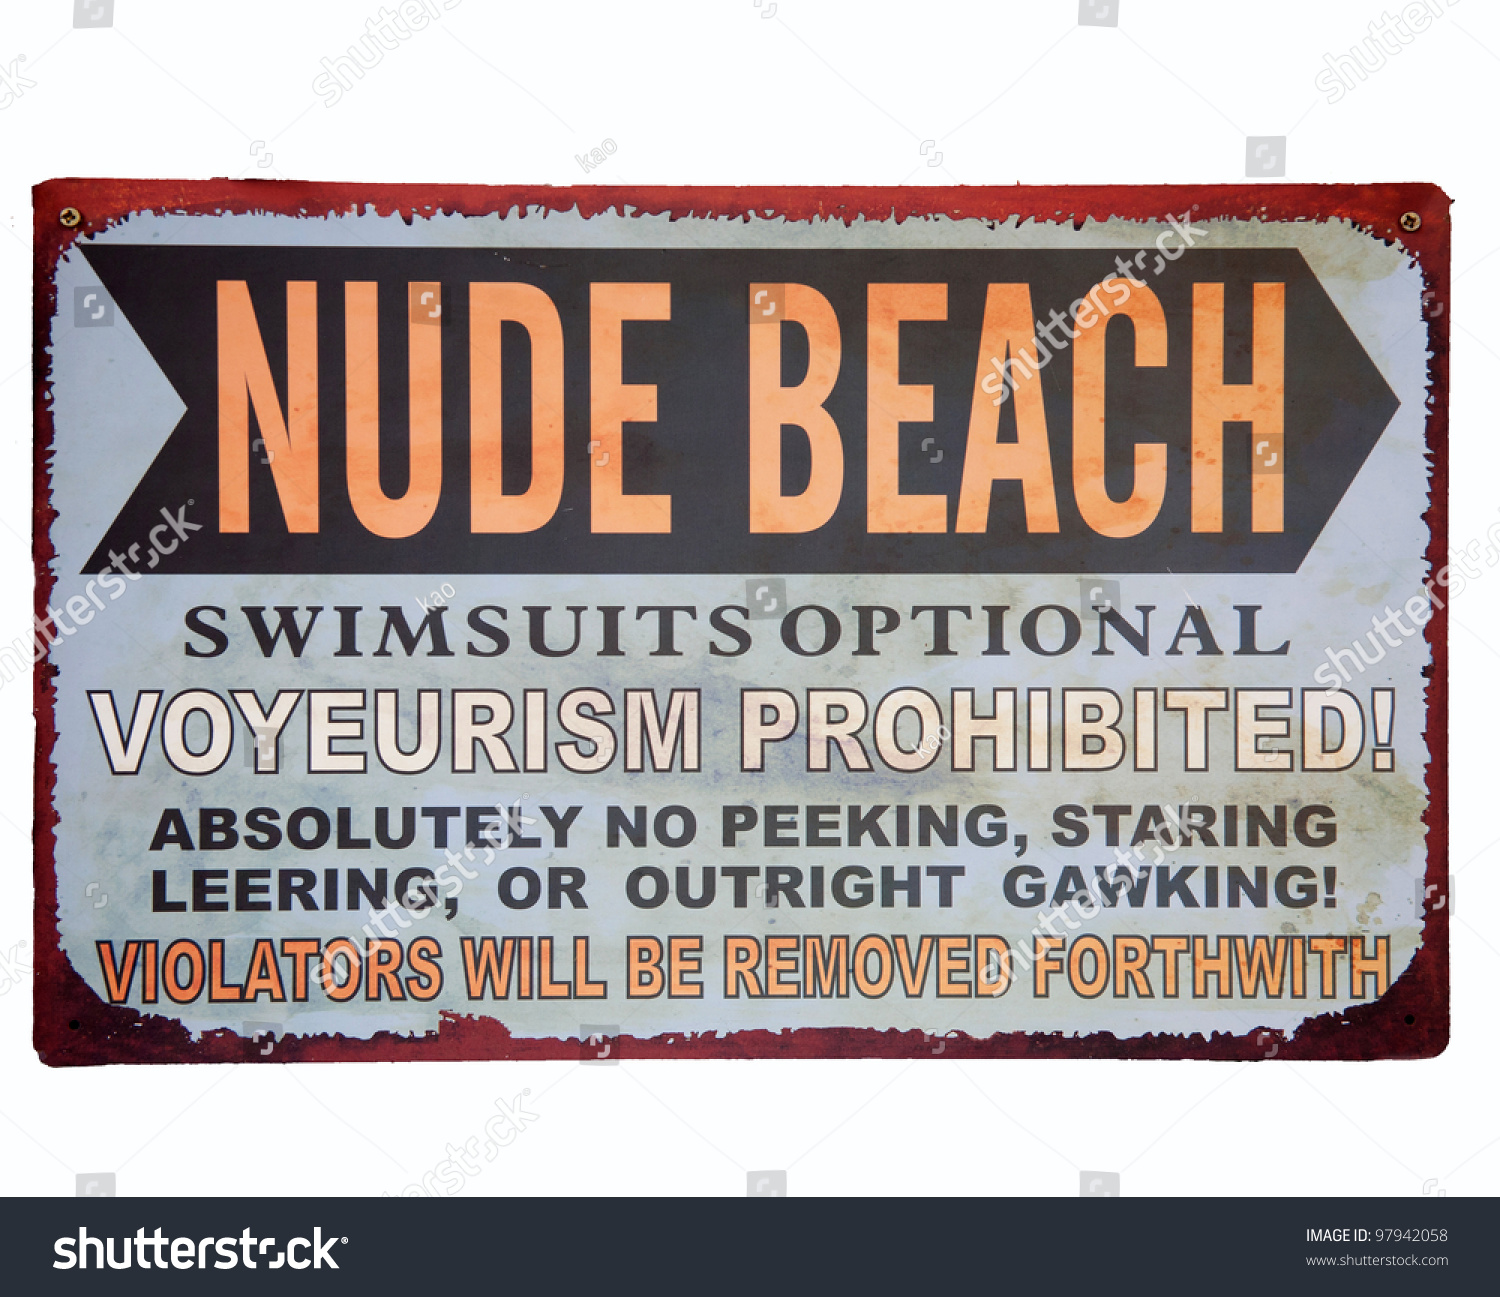 Nude Beach Signsign Board Stock Photo photo